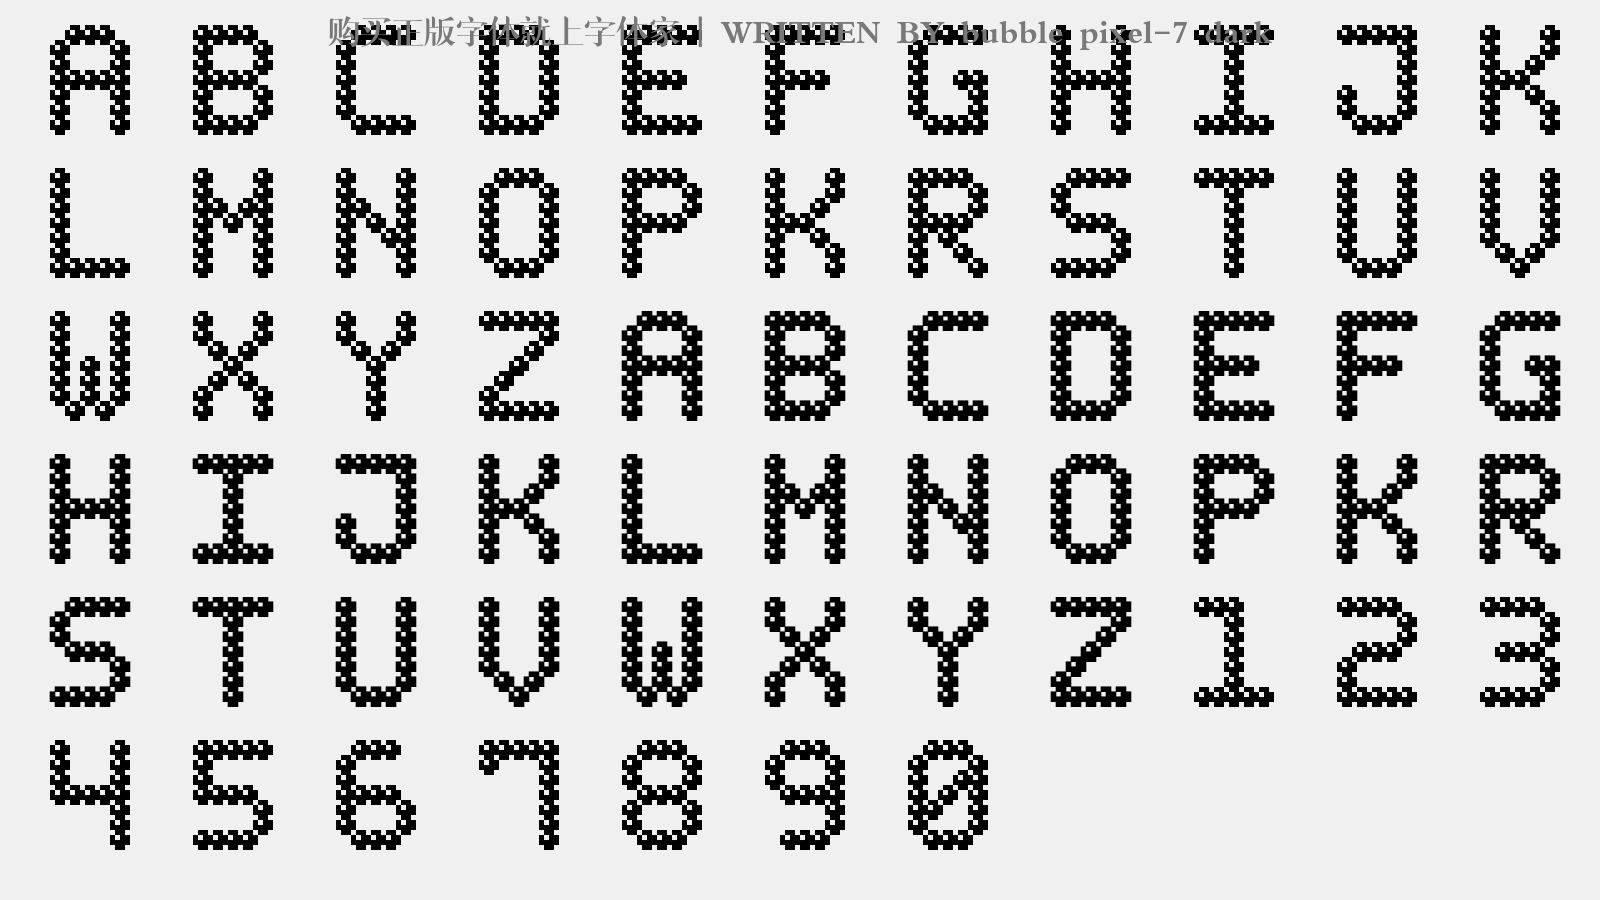 bubble pixel-7 dark - 大写字母/小写字母/数字